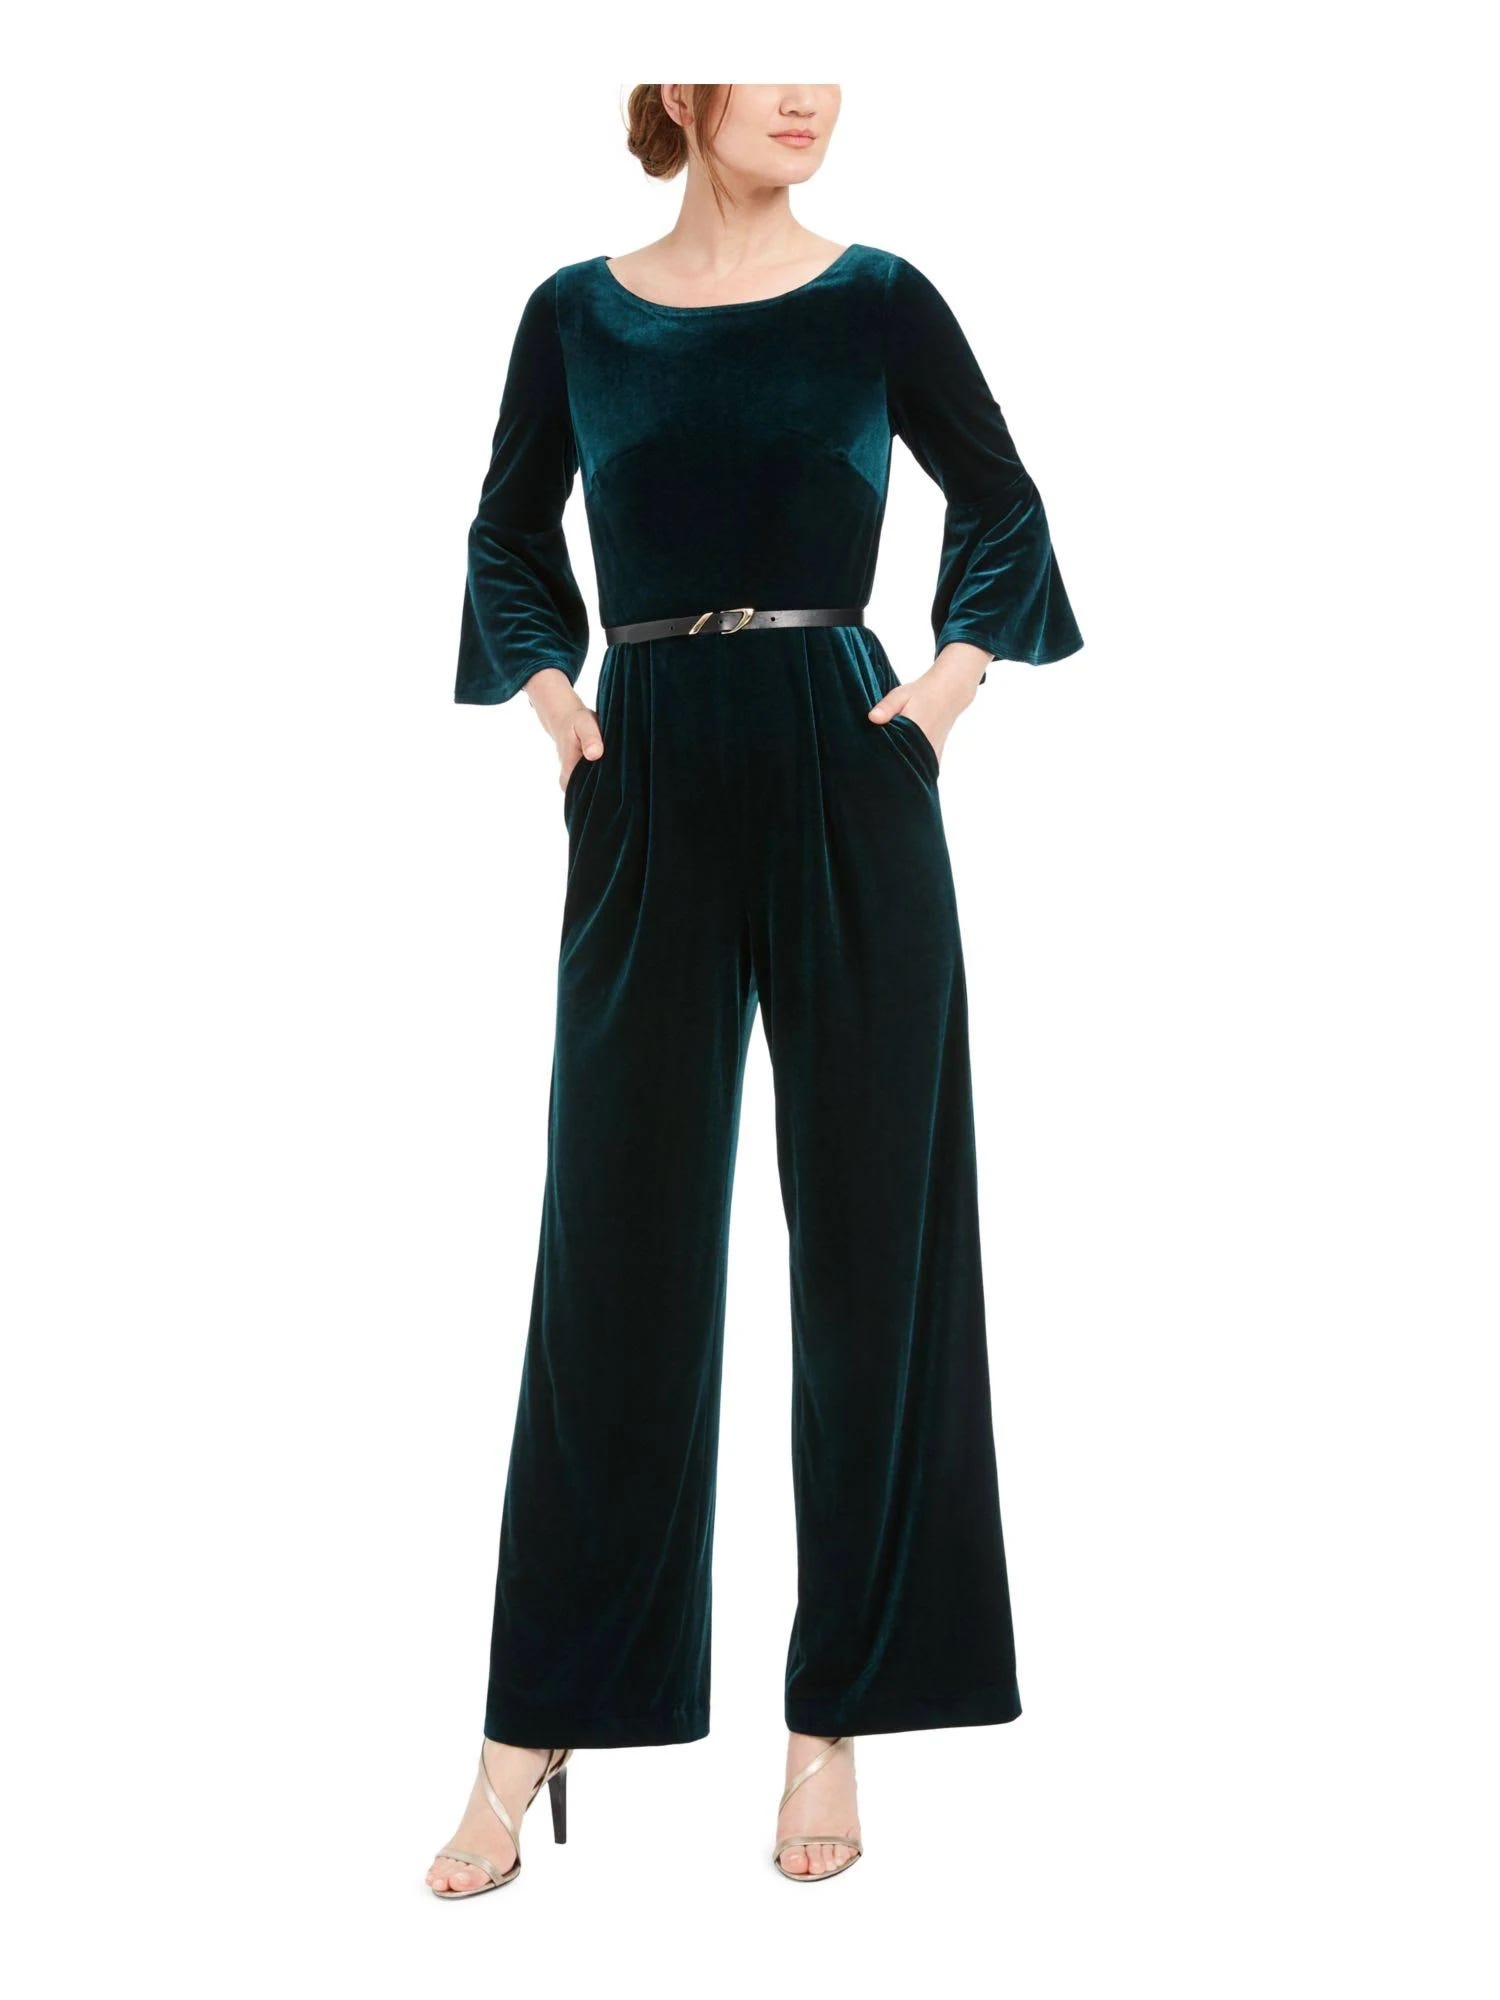 Calvin Klein Green Velvet Belted Bell Sleeve Jumpsuit: Stylish and Flattering Formal Option | Image